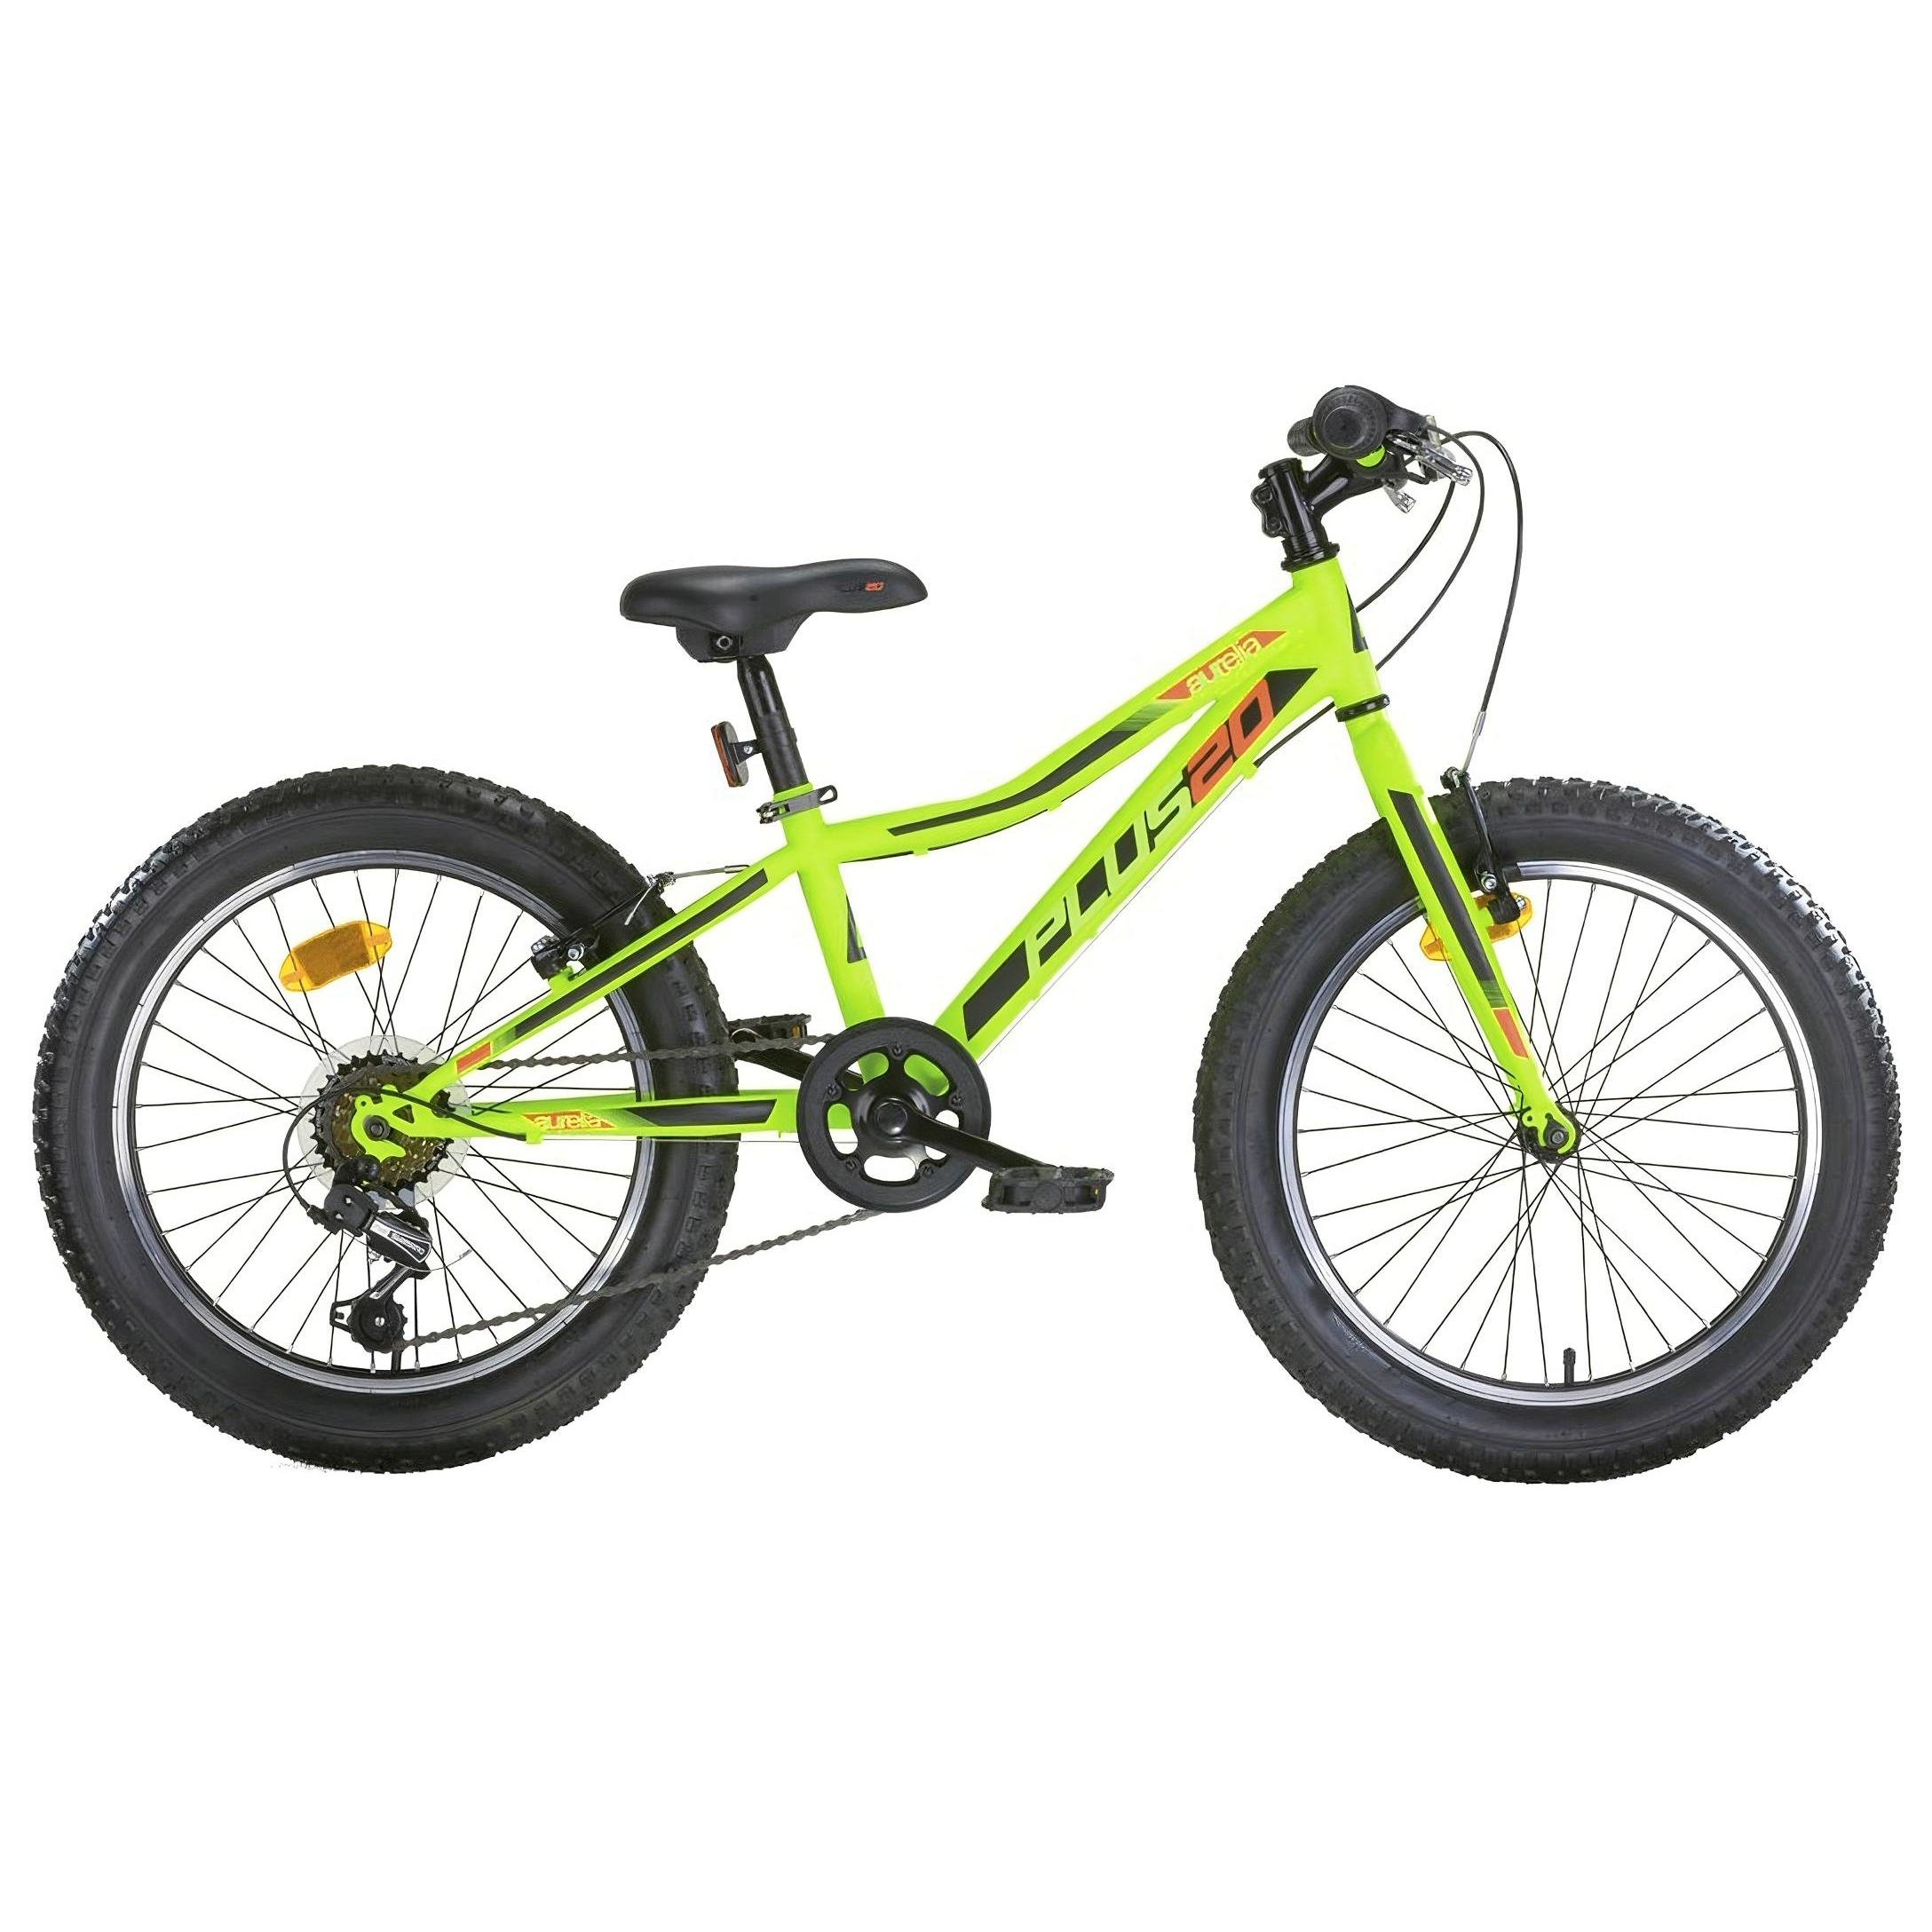 Bicicleta Aurelia Plus 20 Pulgadas Fatbike +7 Años - verde - 